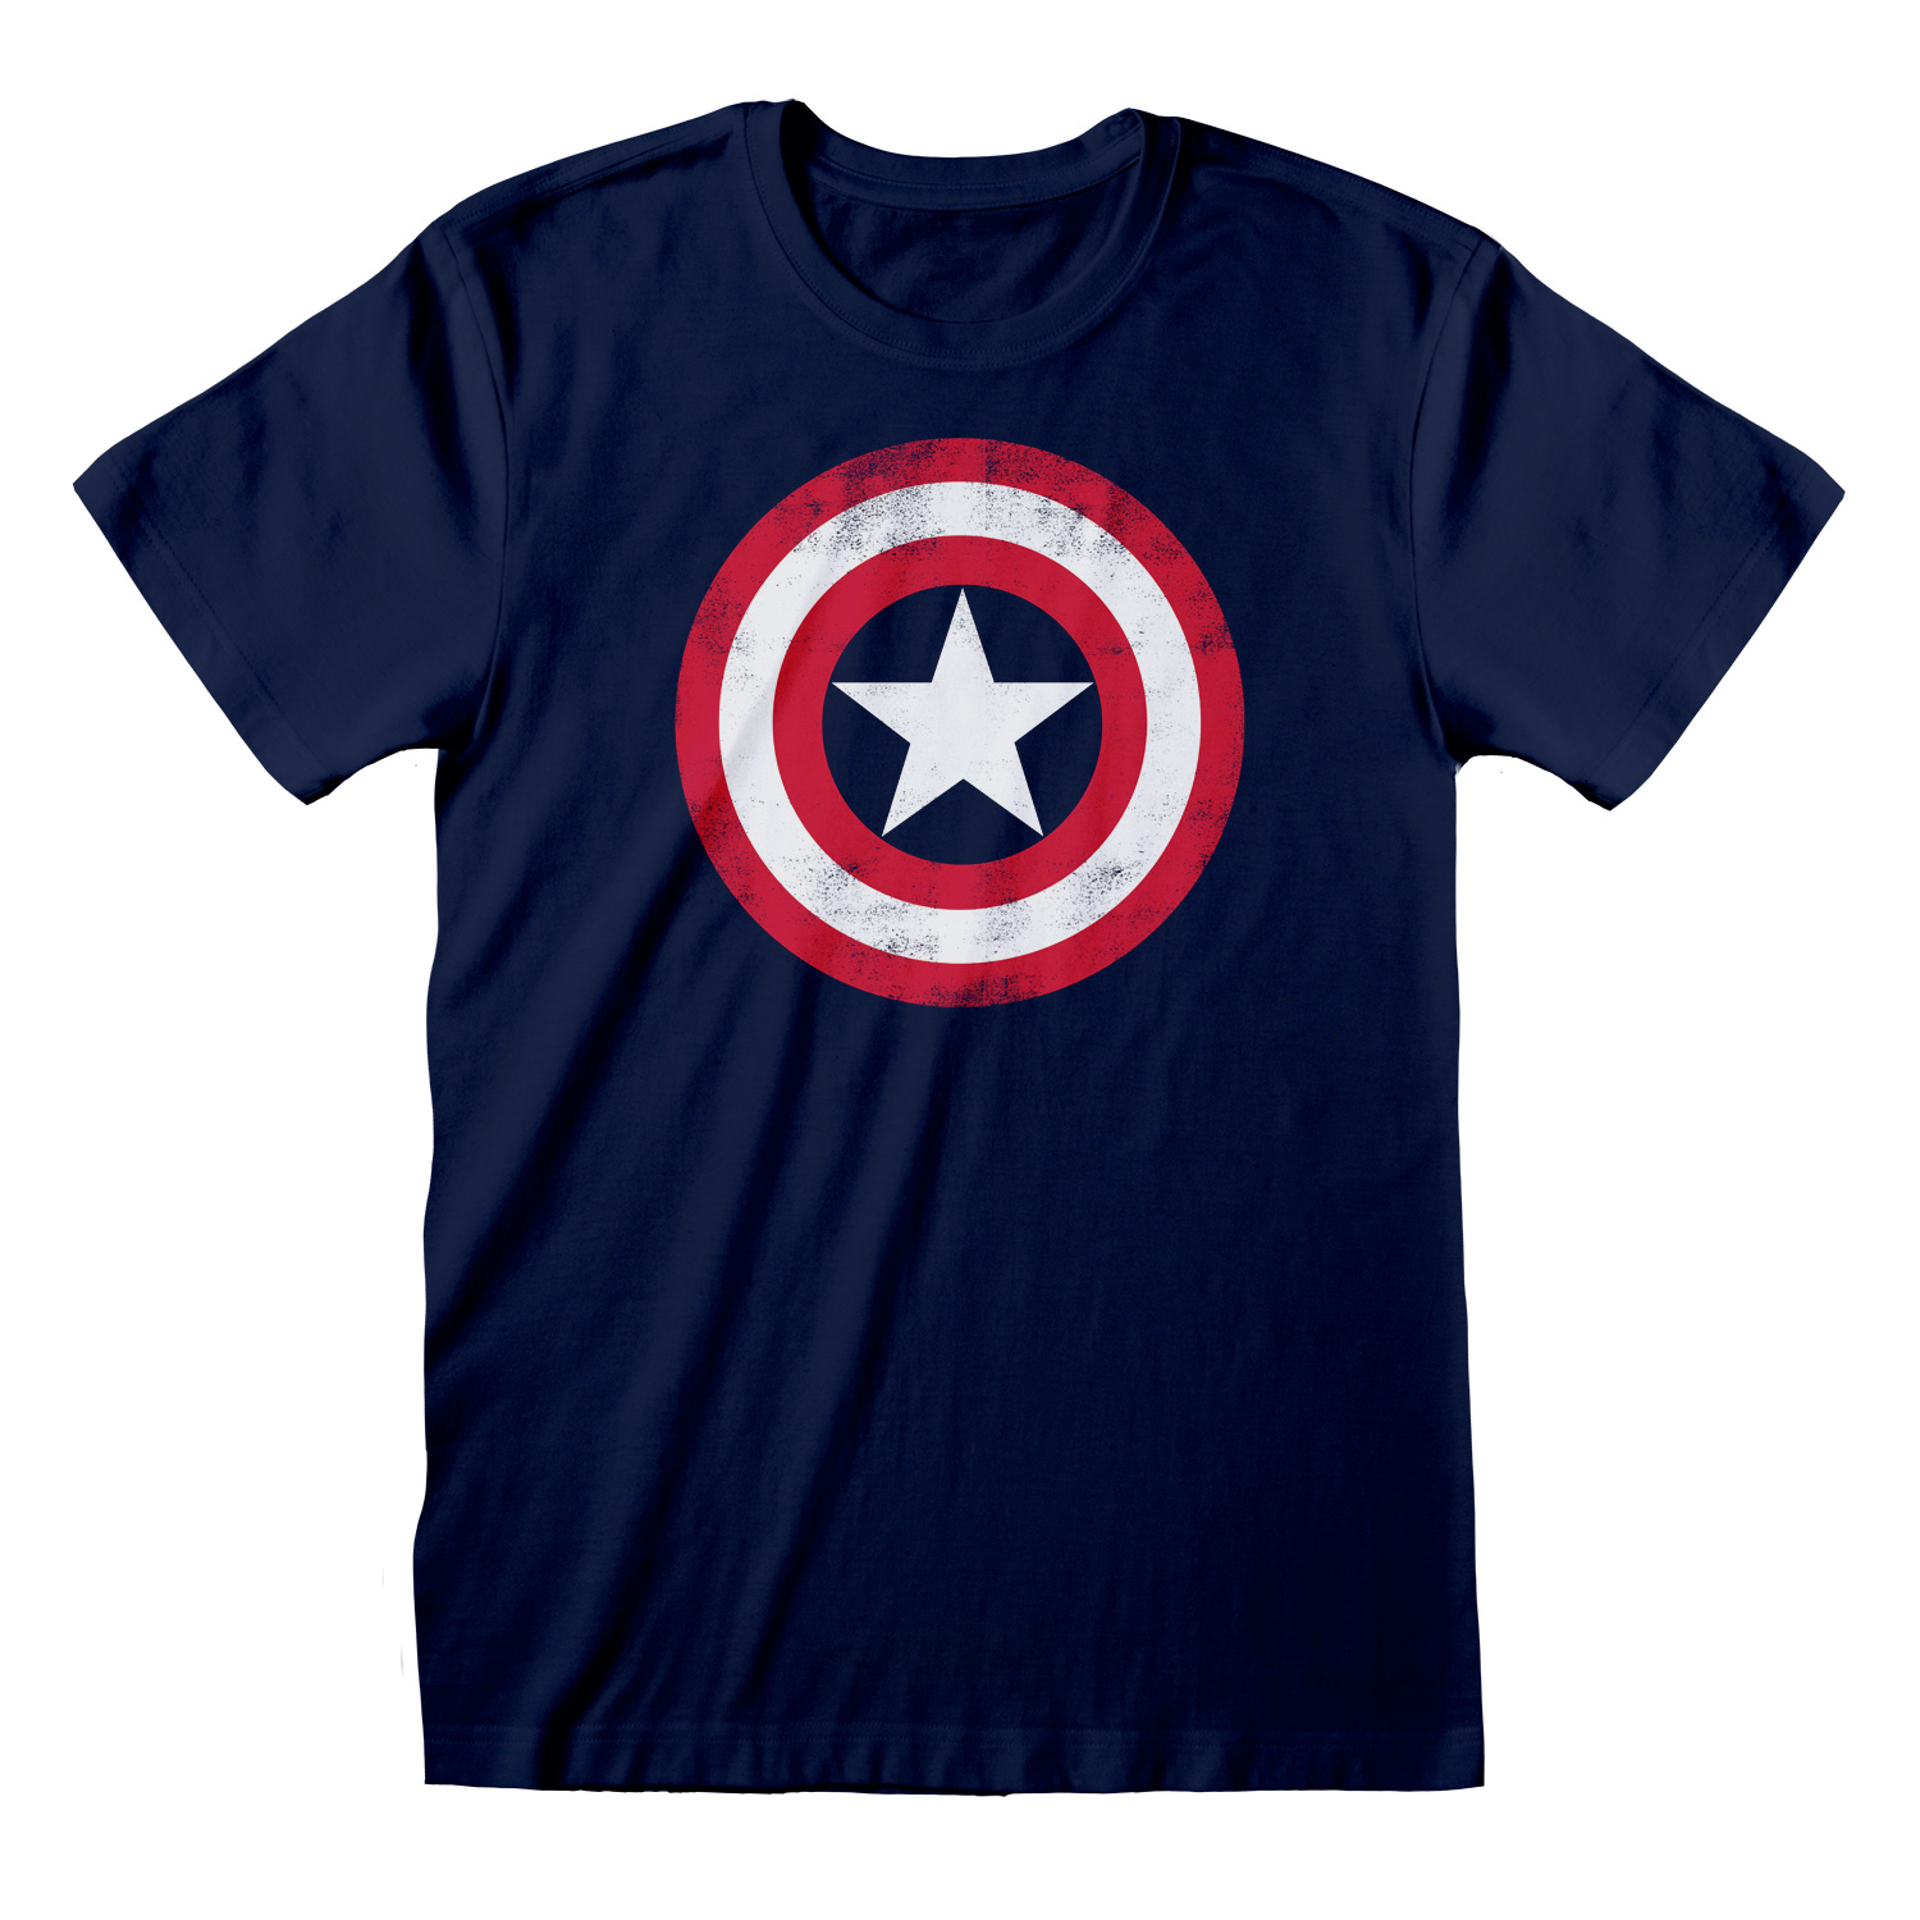 Marvel -  T-shirt unisexe Bleu Marine Logo vieilli du bouclier de Captain America - S